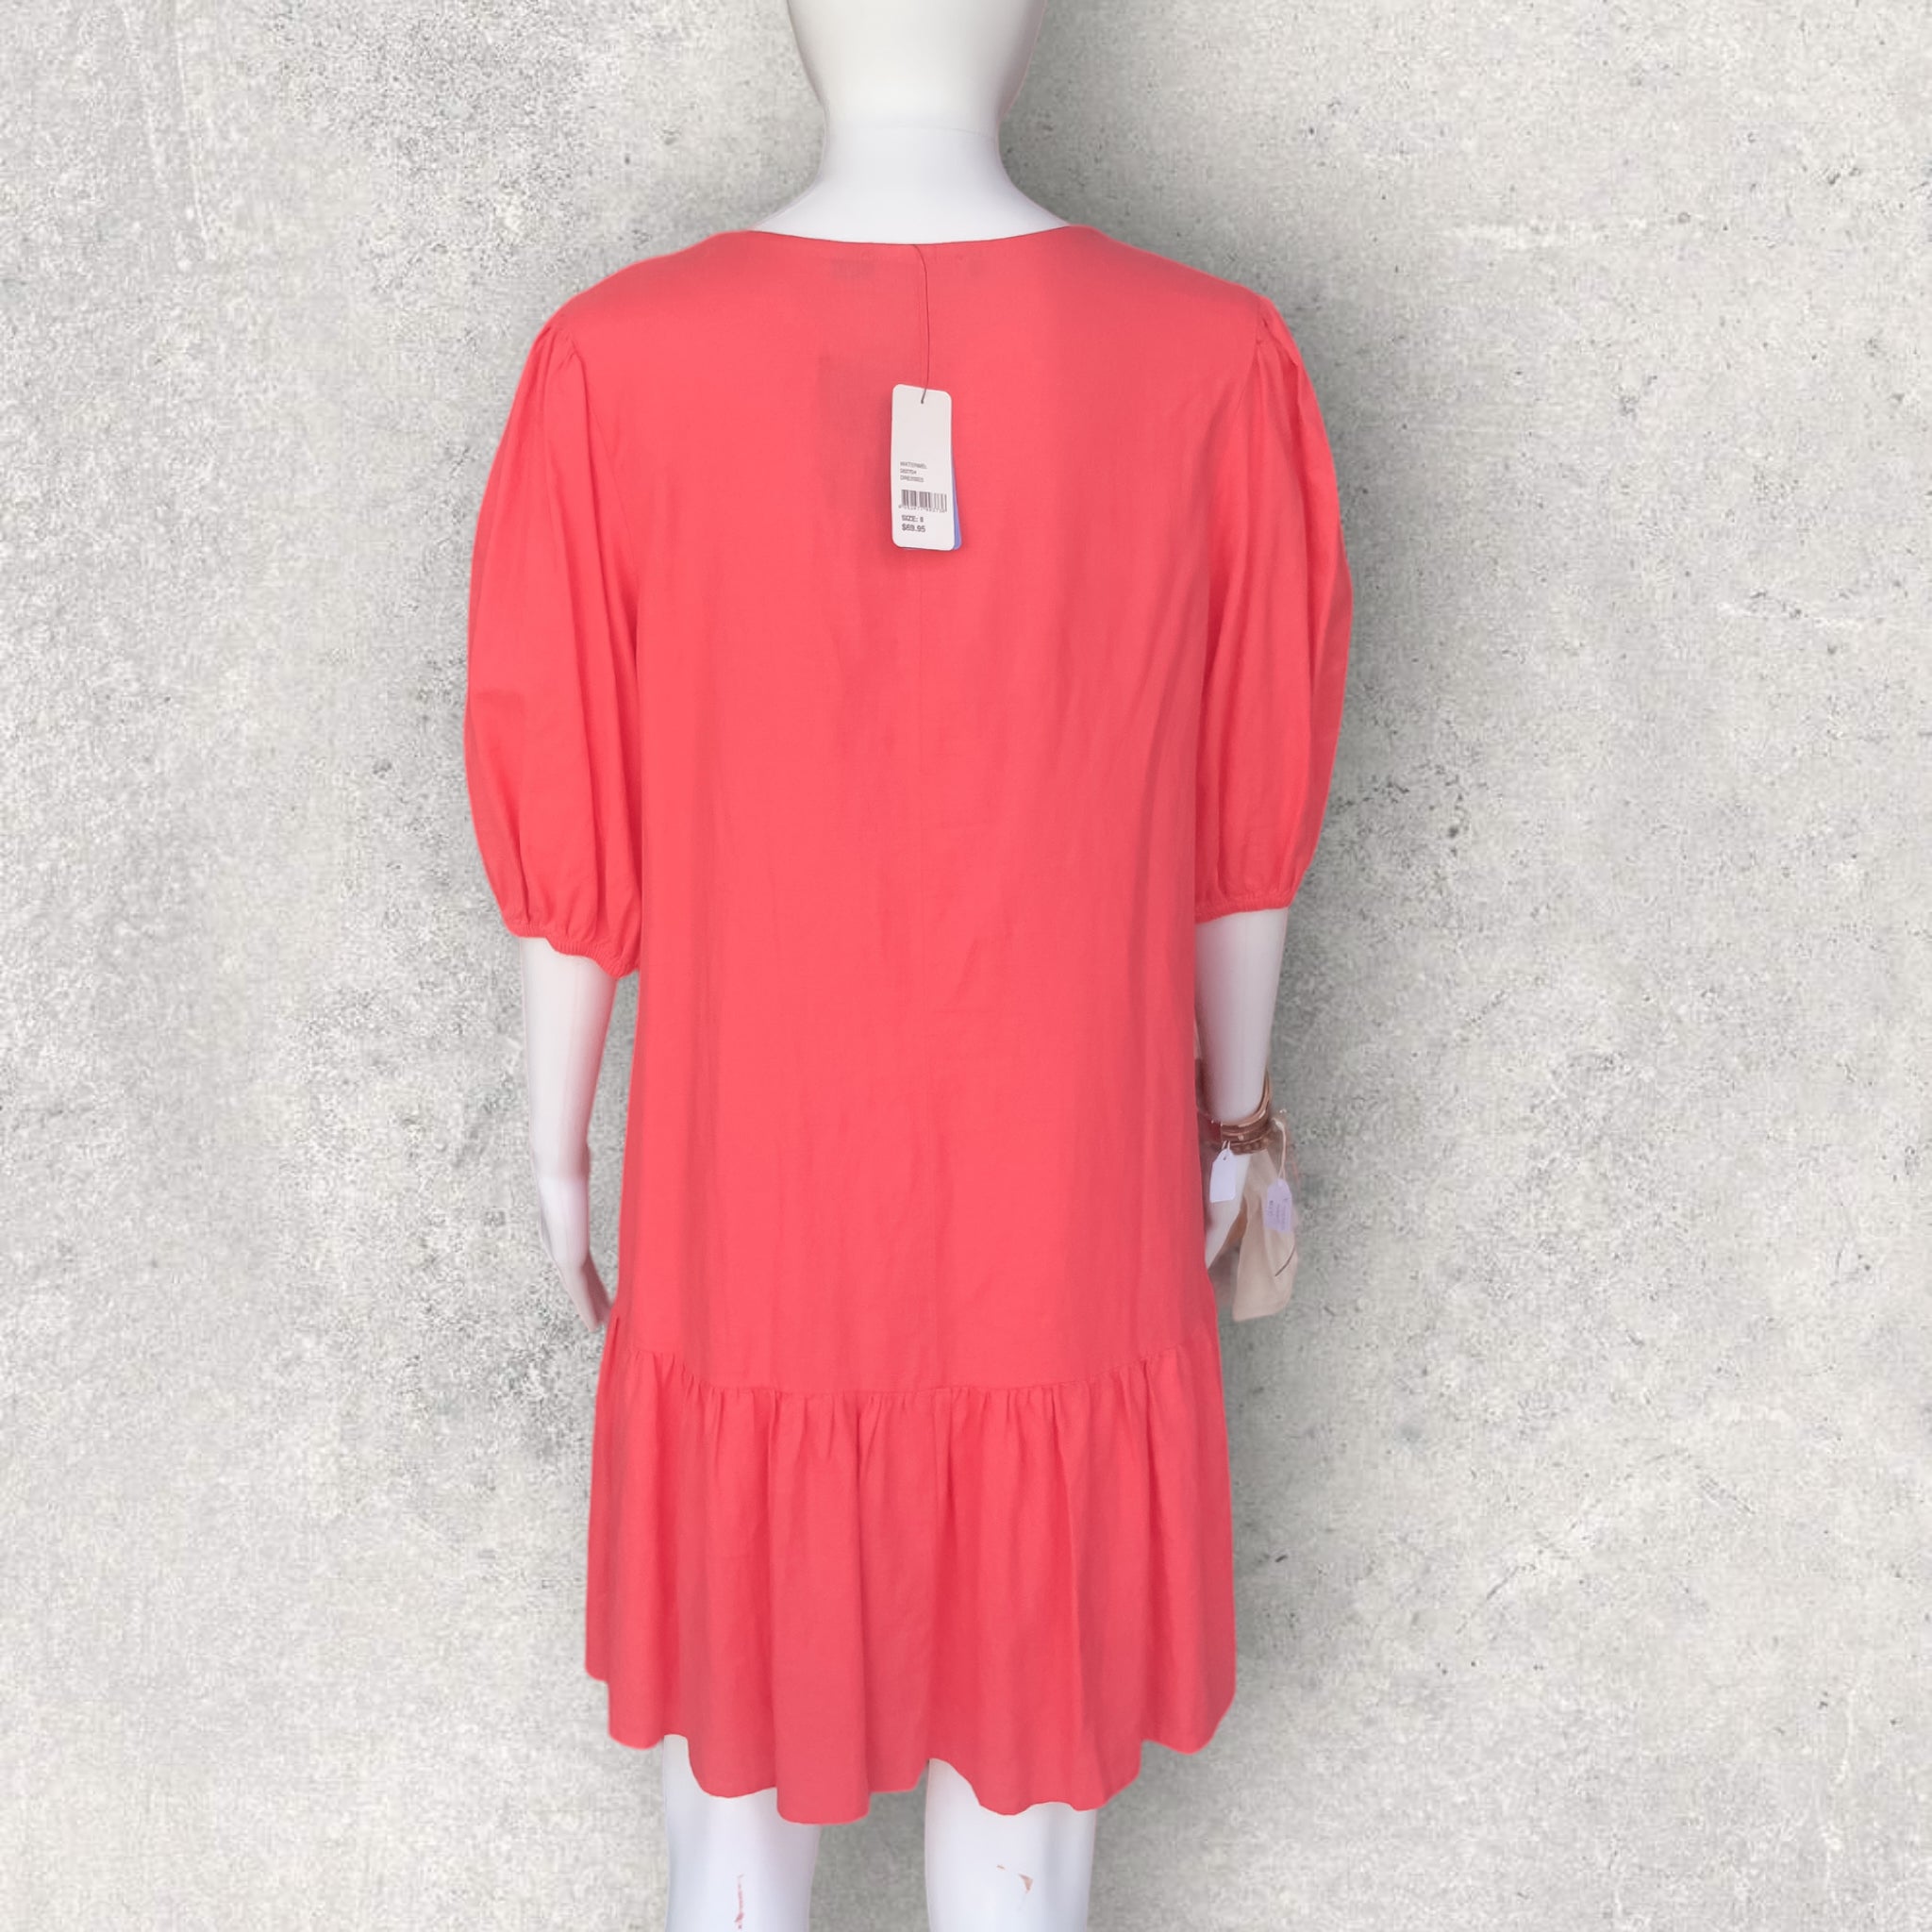 BNWT SPORTSGIRL Puff Sleeved Linen Babydoll Dress in Watermelon - Size 8/10